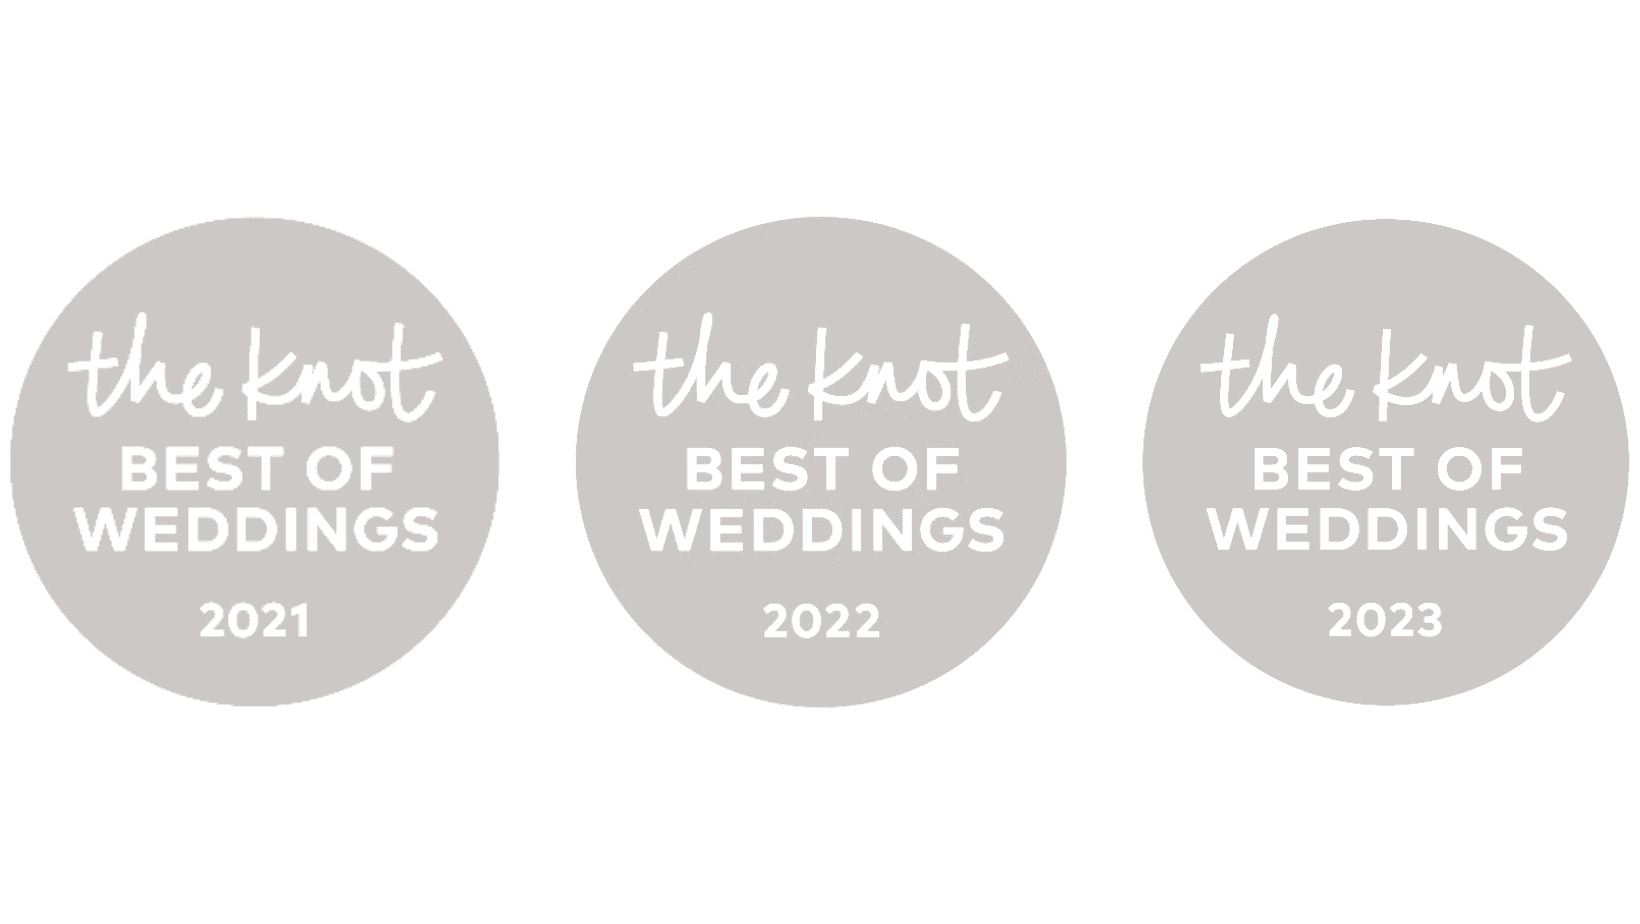 The Knot Best of Weddings winner 2023